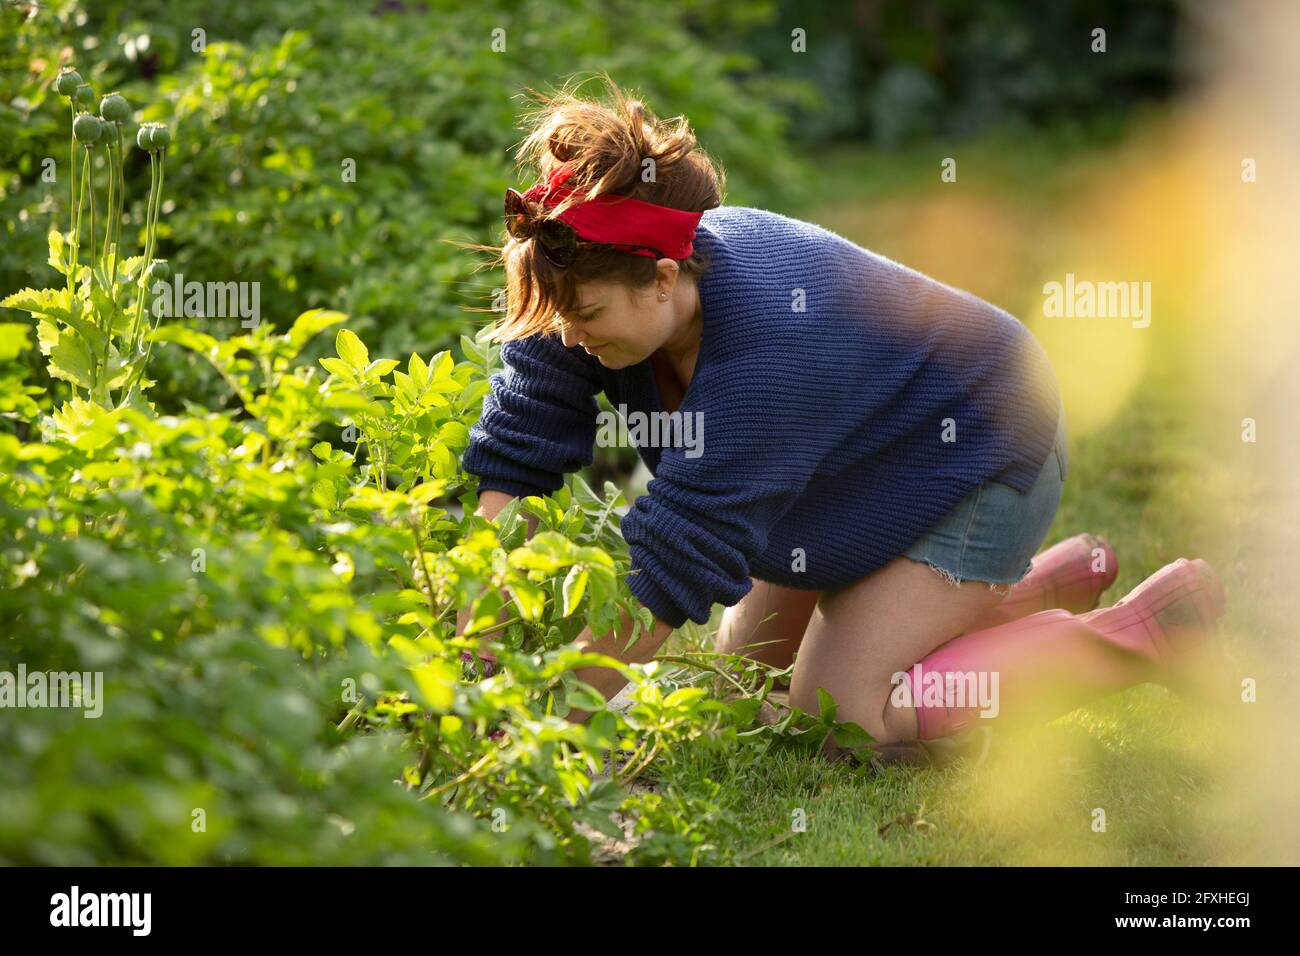 Woman tending to plants in summer vegetable garden Stock Photo